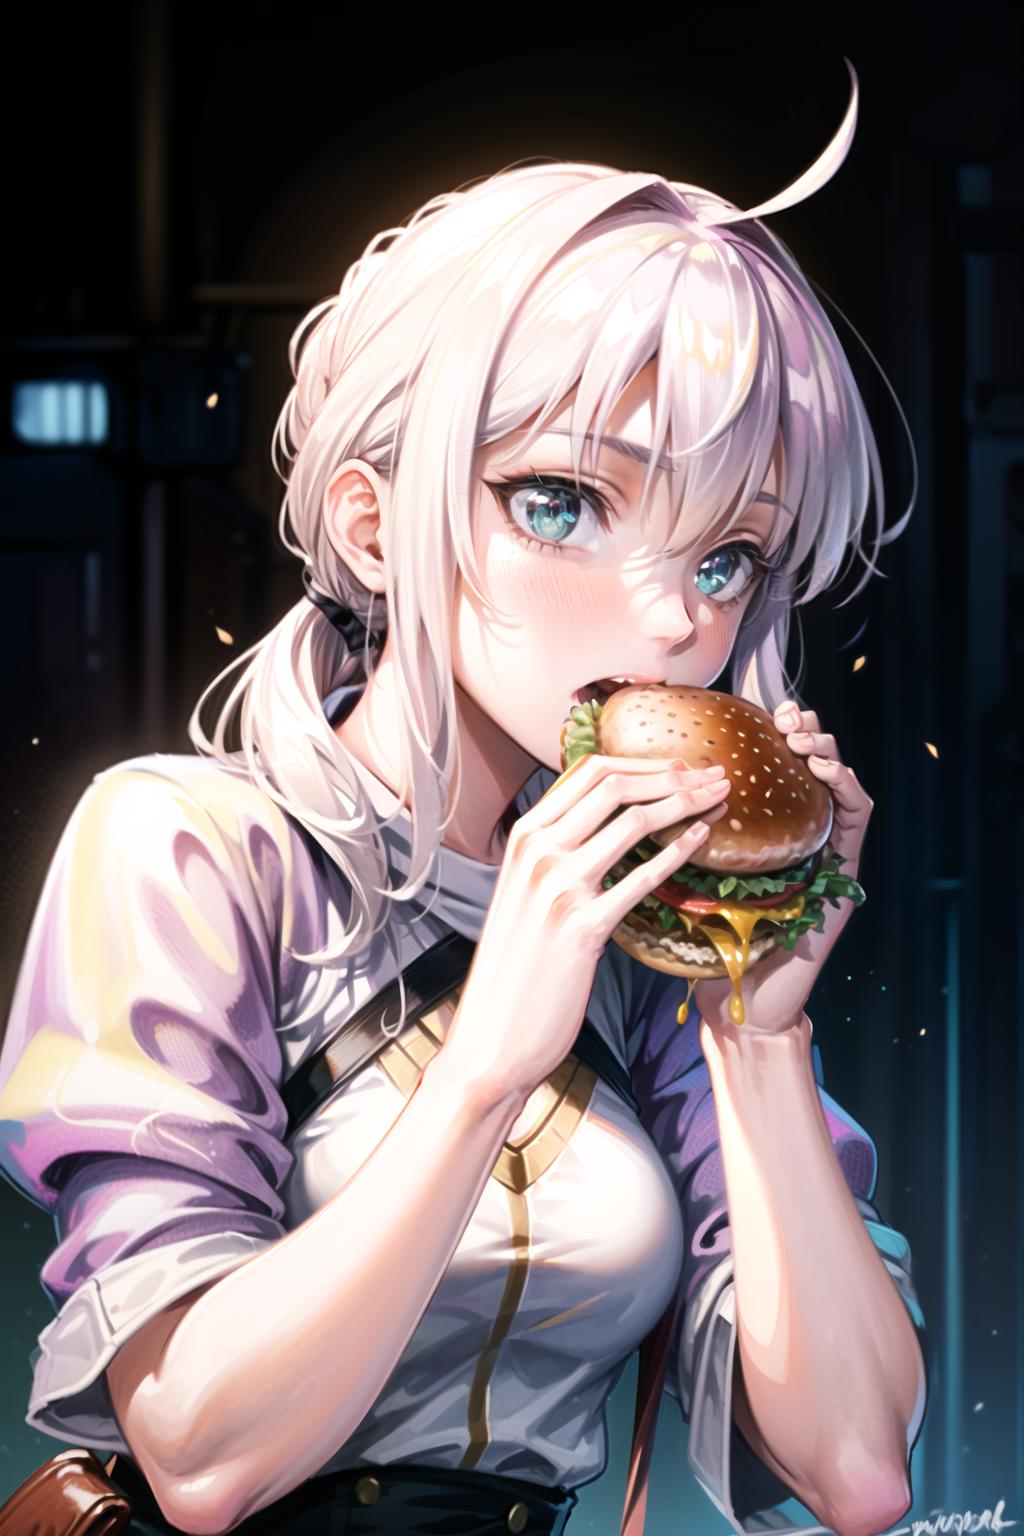 anime girl eating burger